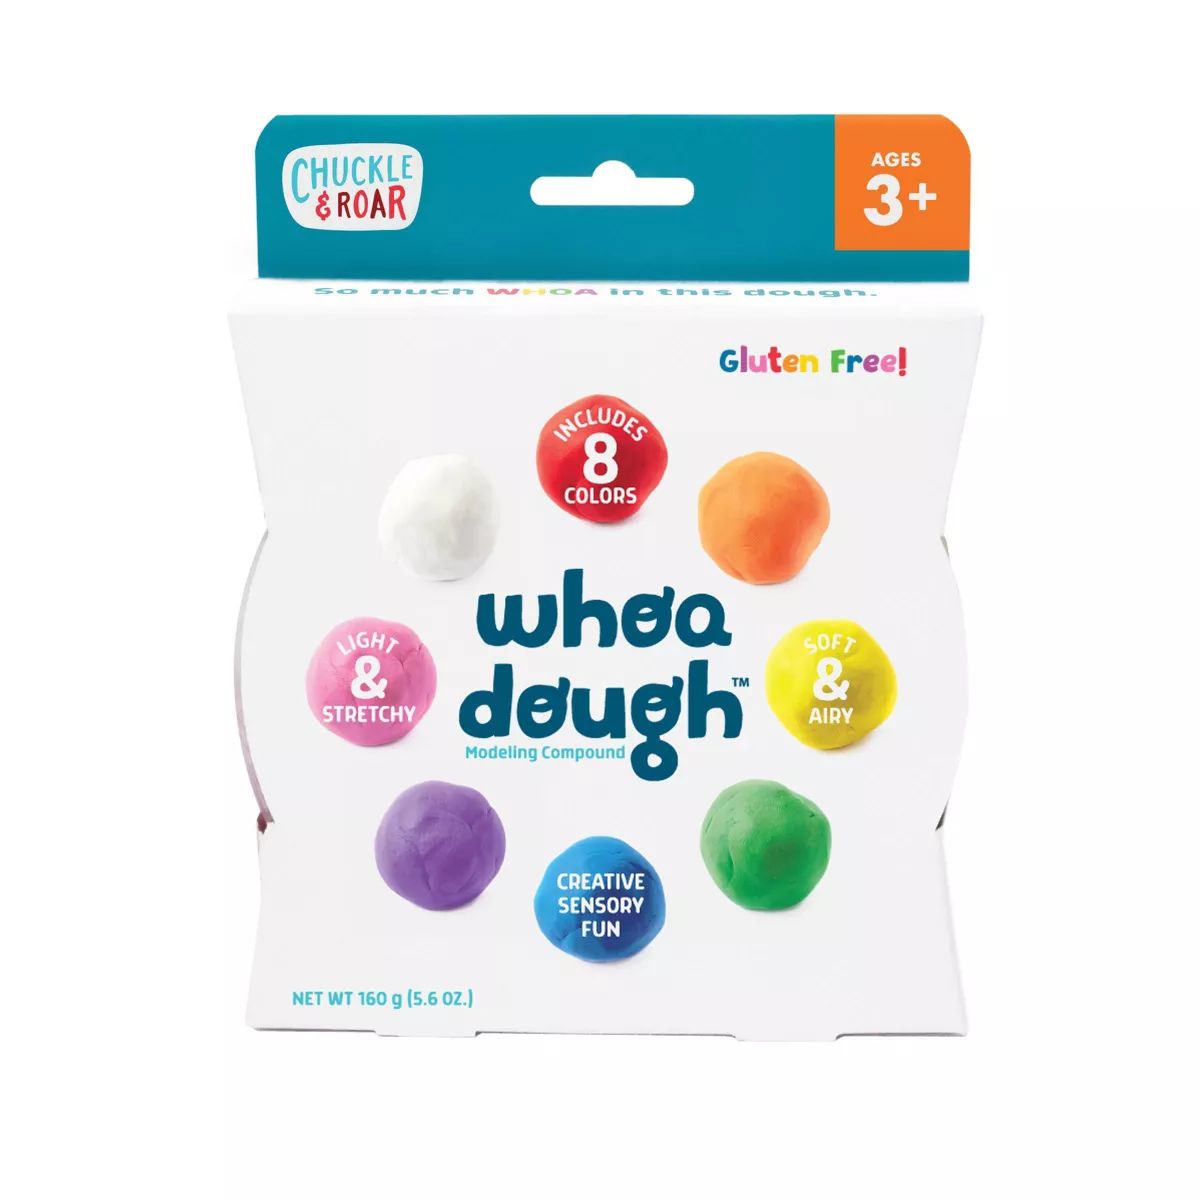 Chuckle & Roar Whoa Dough | Target